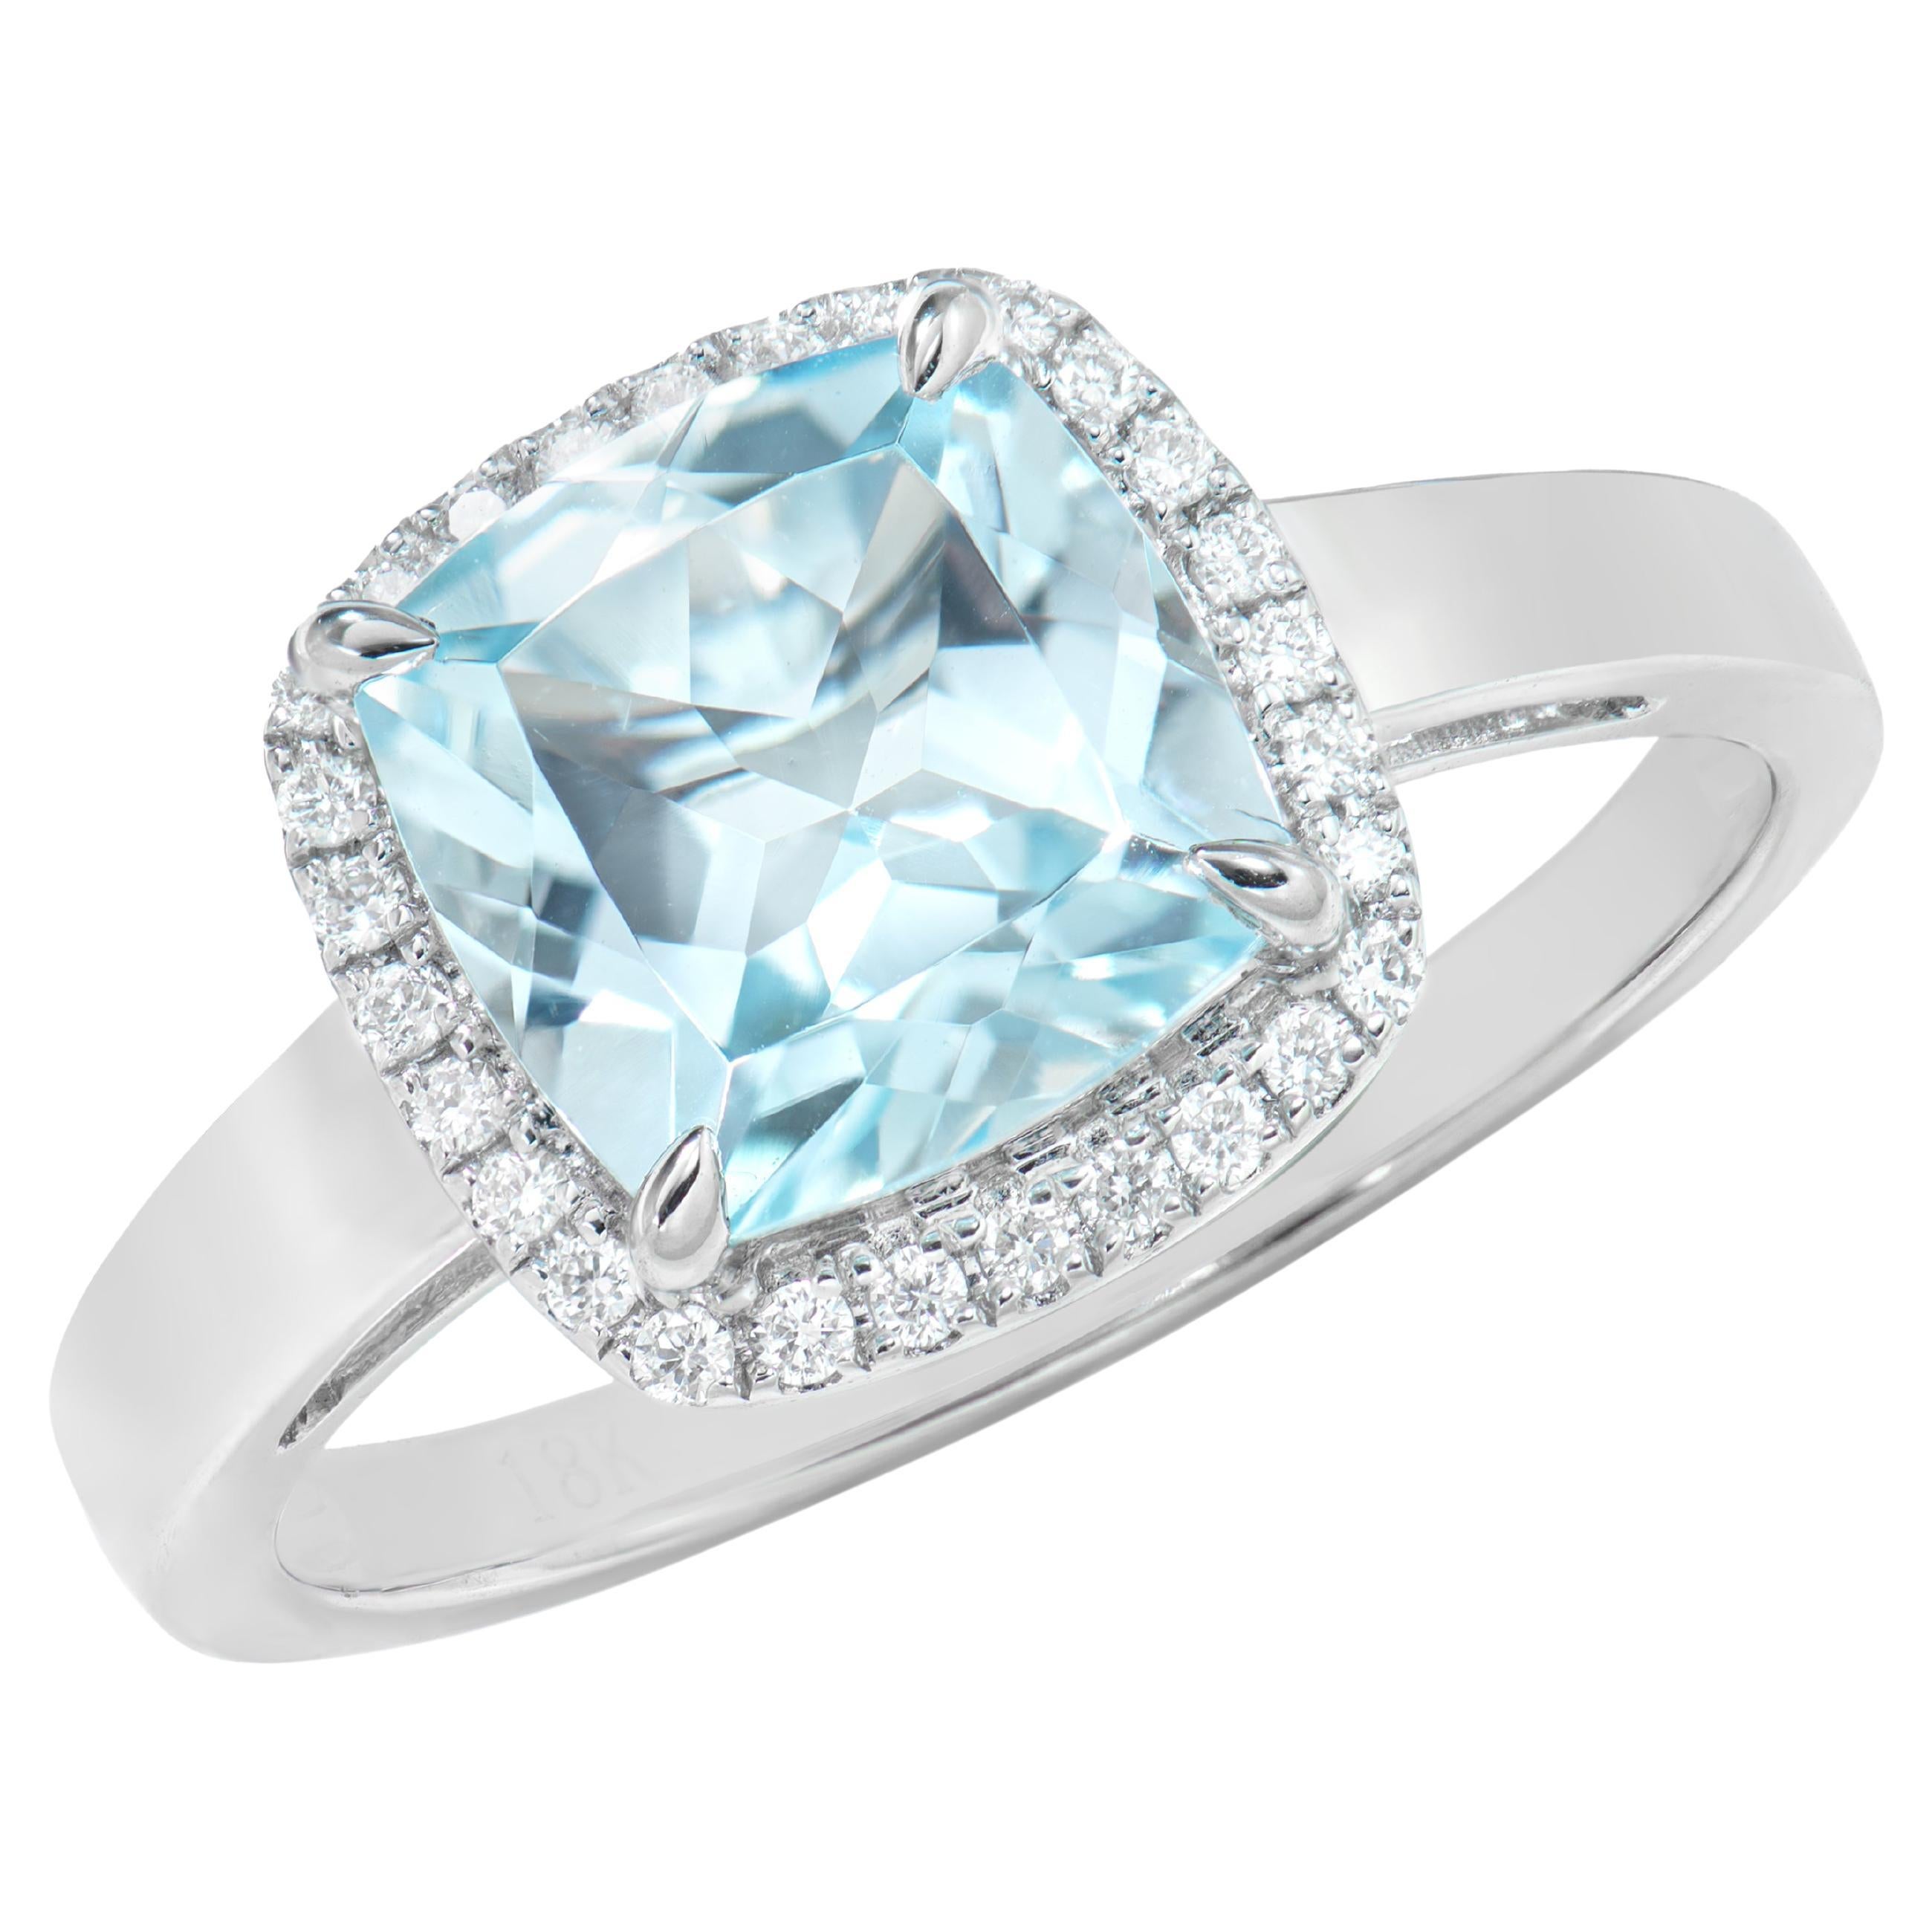 2.68 Carat Swiss Blue Topaz Fancy Ring in 18Karat White Gold with White Diamond.